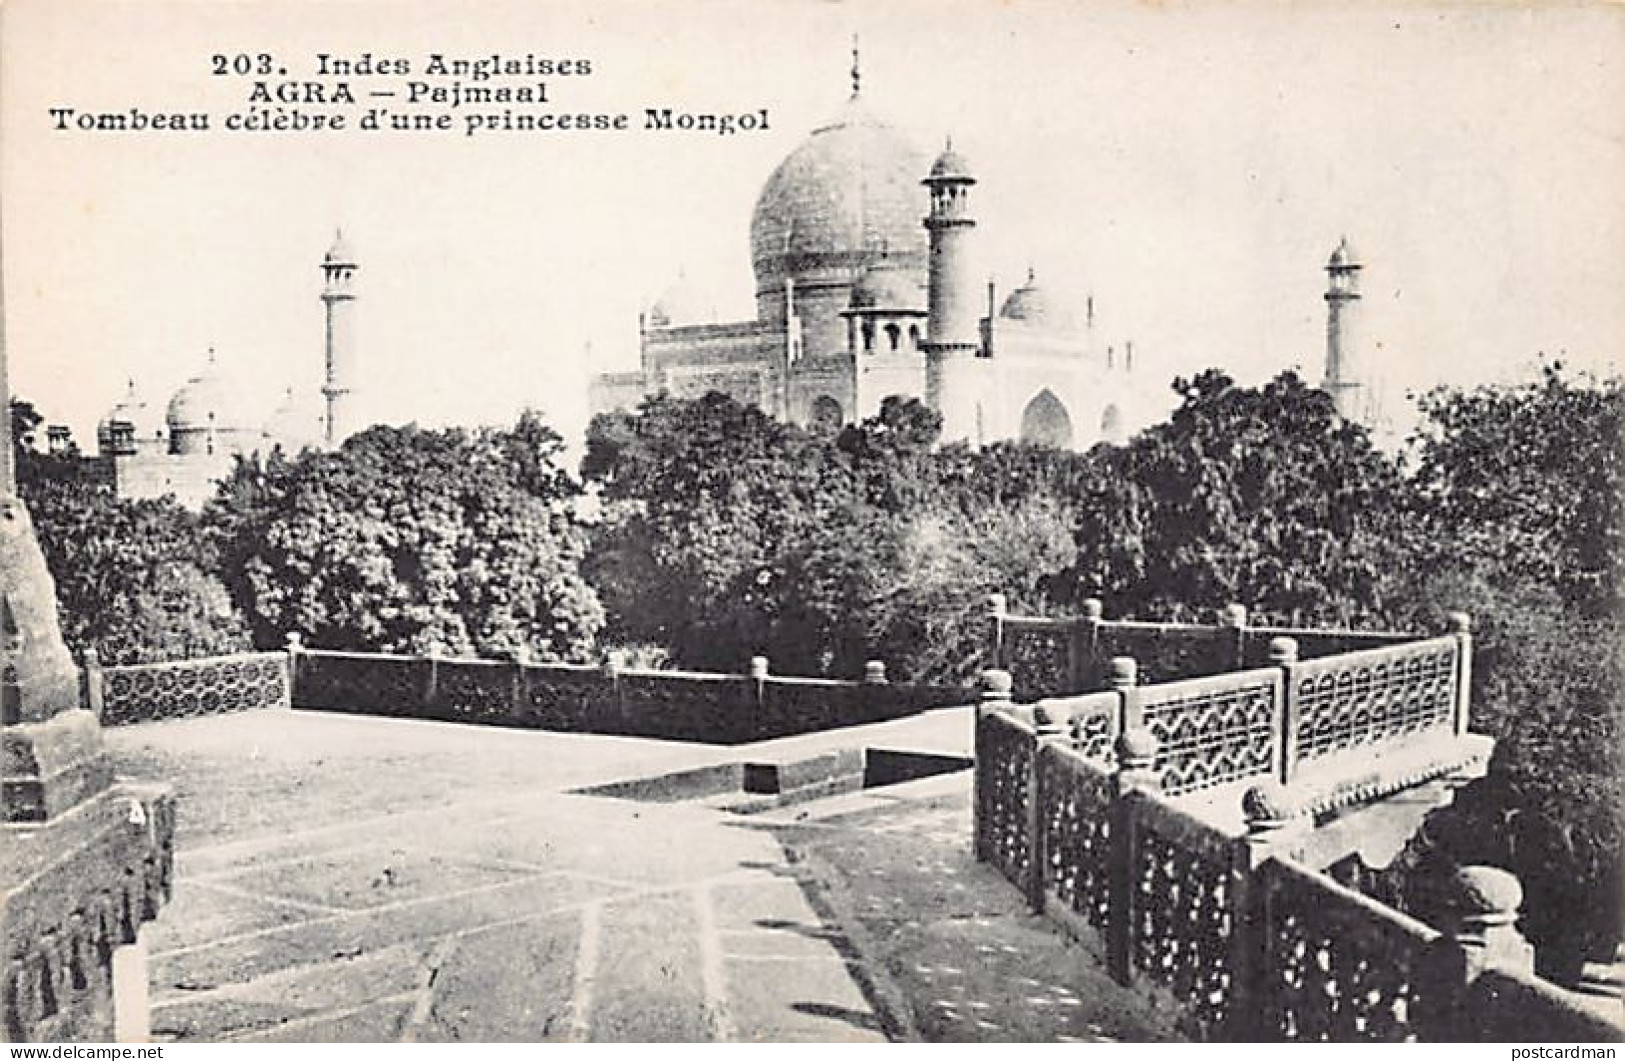 India - AGRA - The Taj Mahal - Publ. Messageries Maritimes 203 - Inde